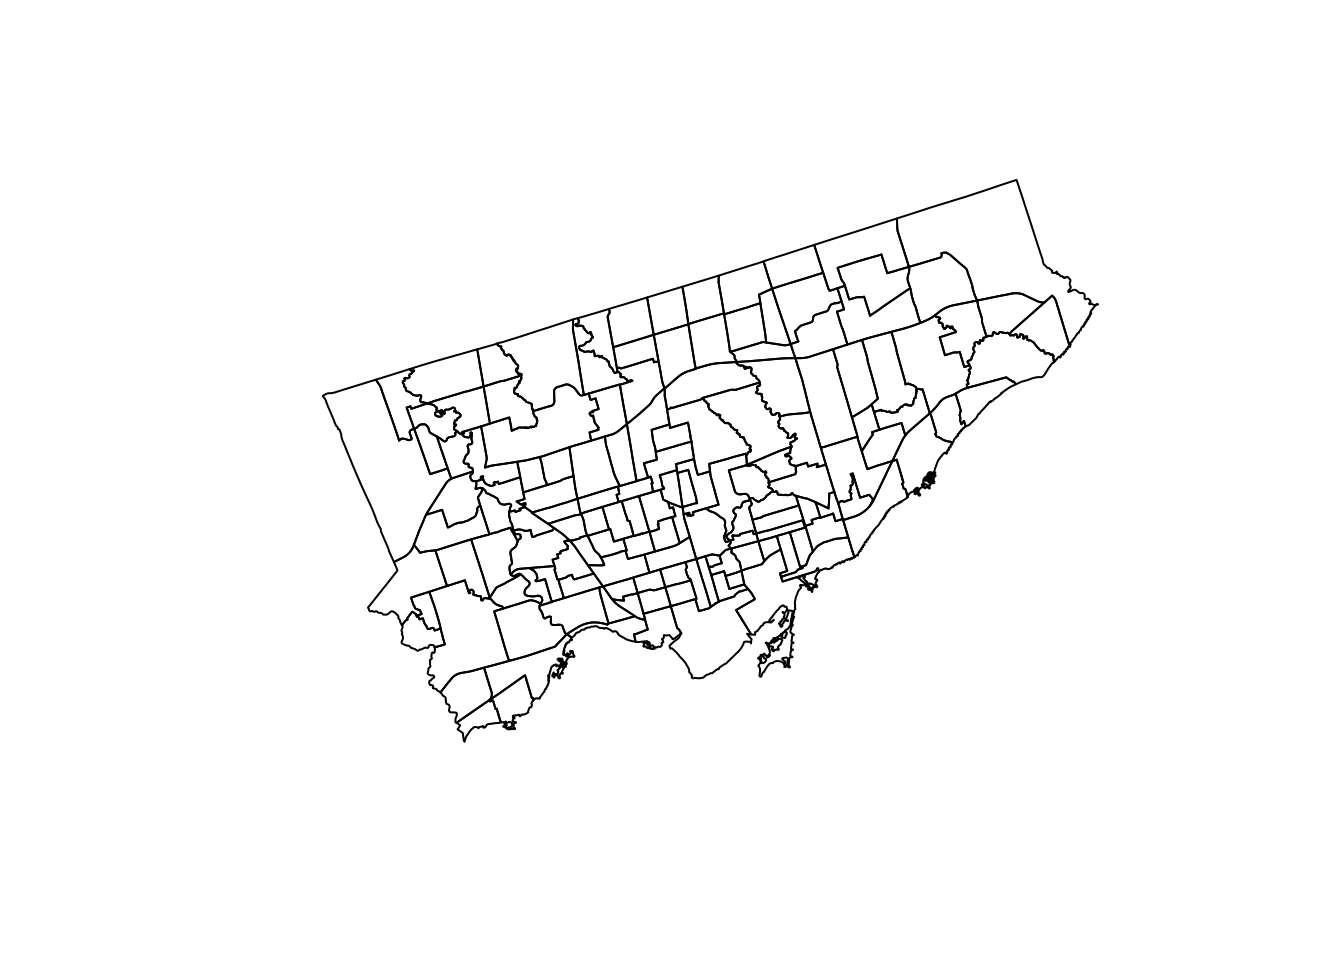 Map of the City of Toronto neighbourhood boundaries.